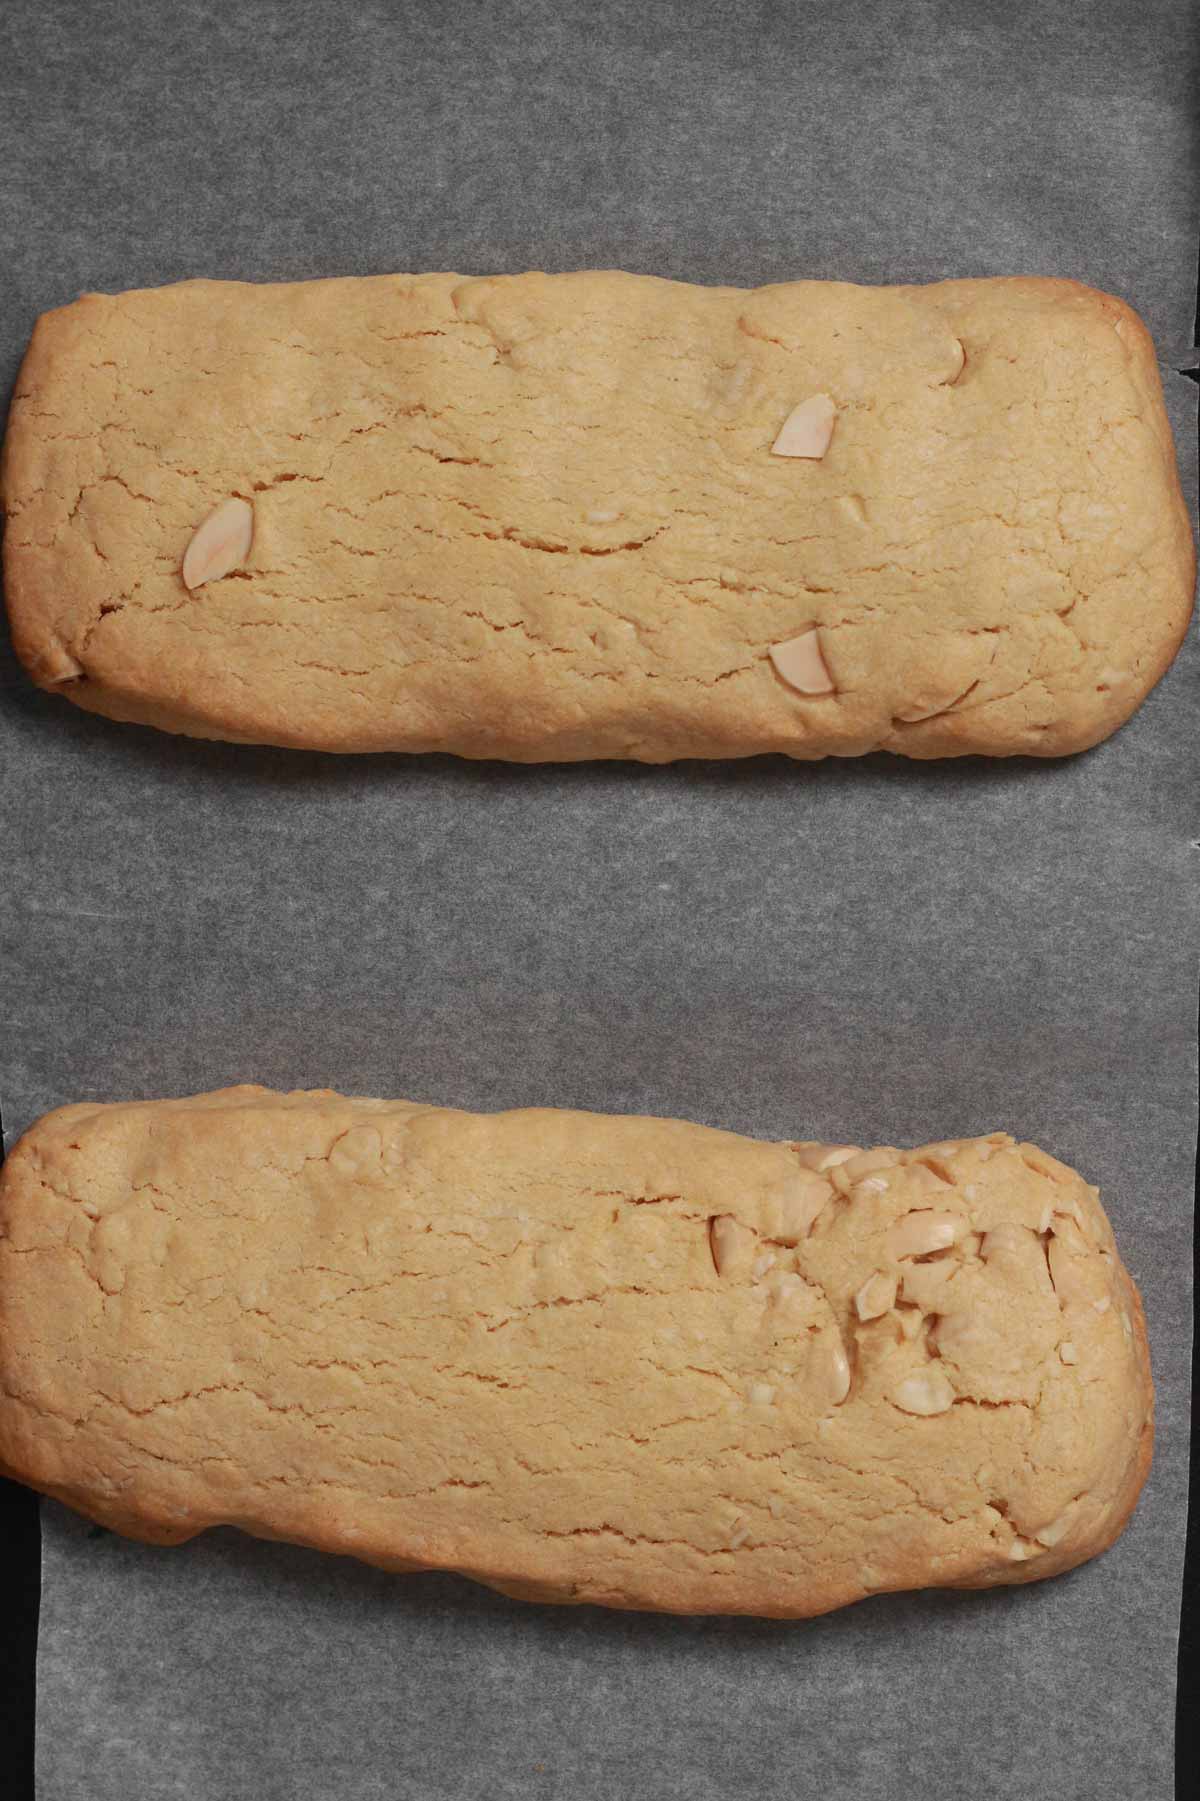 2 Biscotti Logs On Baking Tray